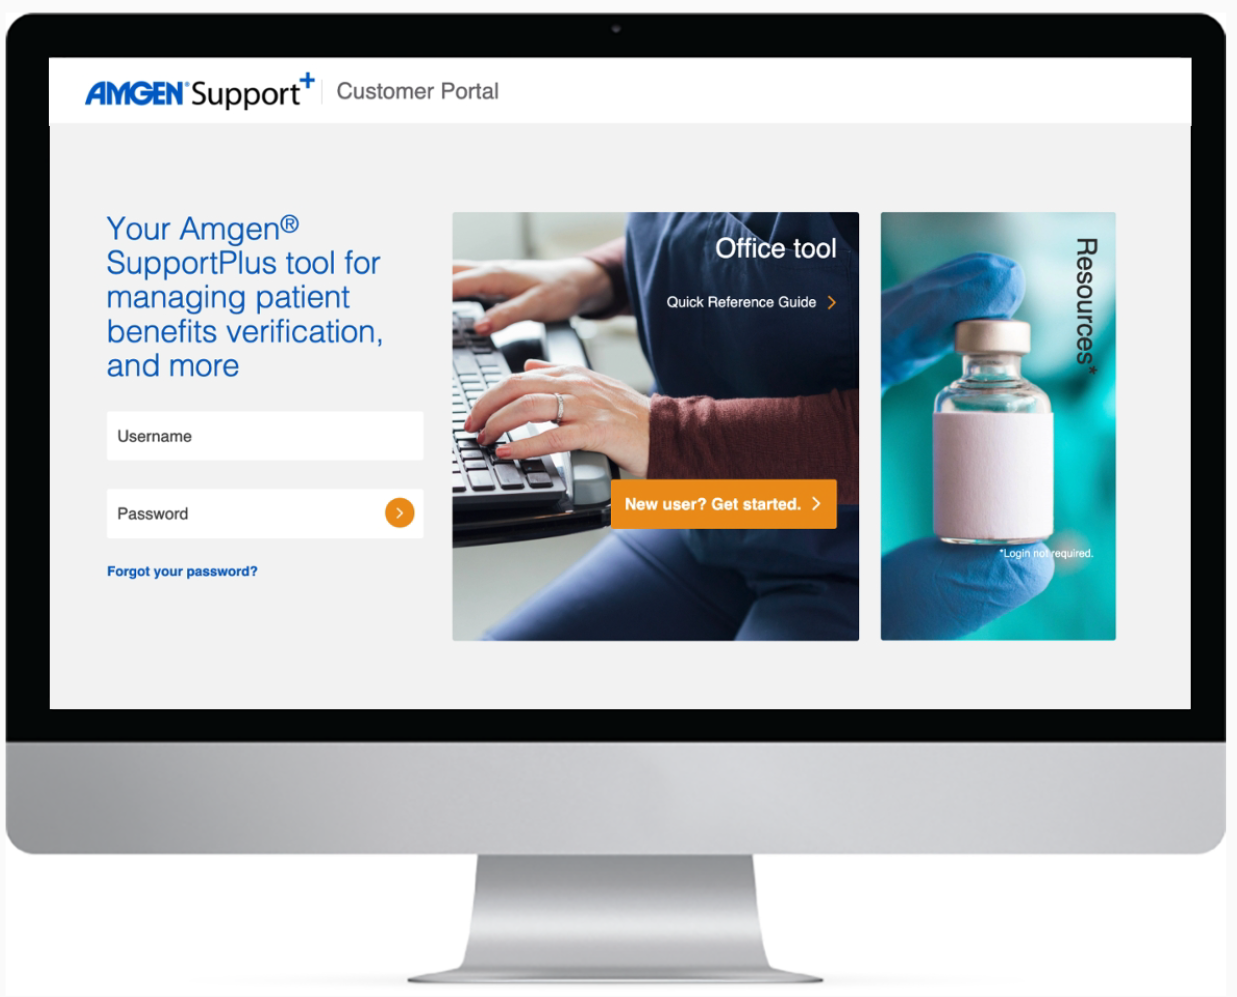 Access Amgen® SupportPlus Customer Portal